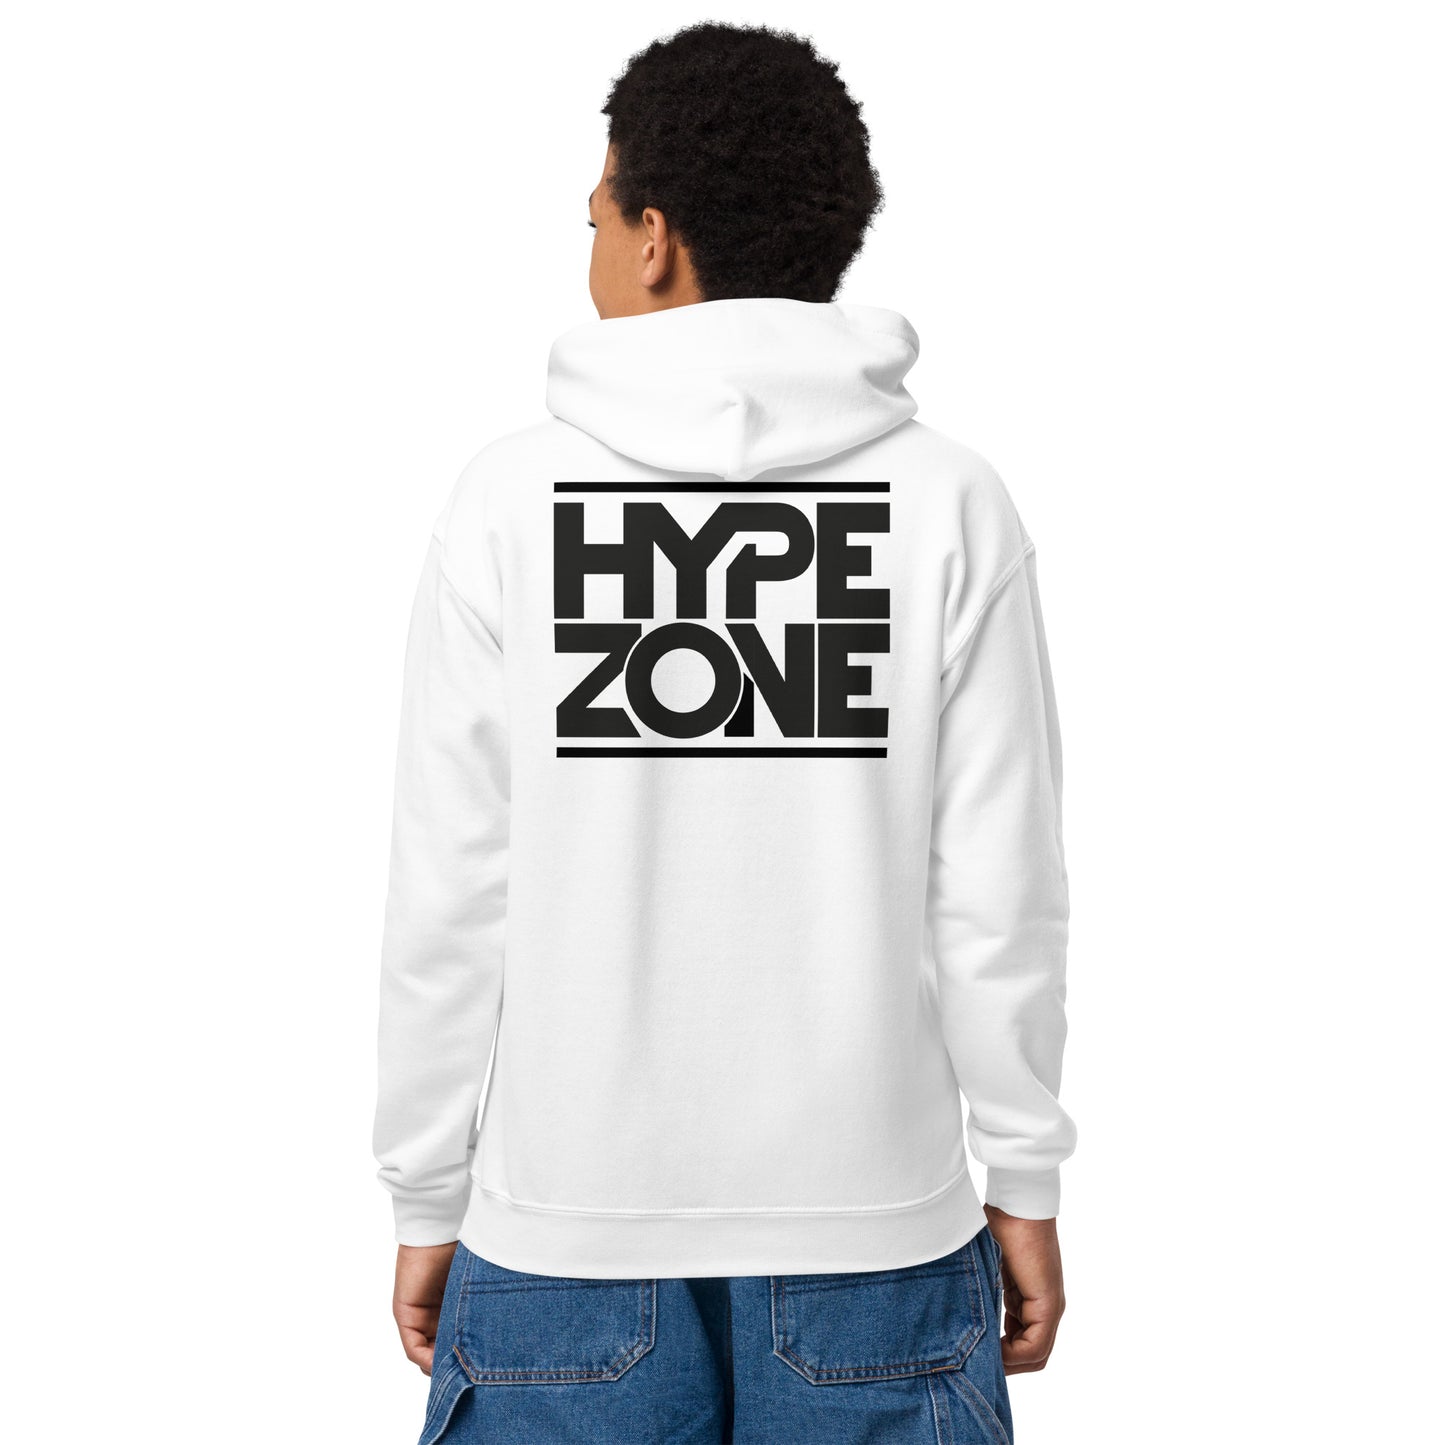 Hype Zone Kids White Hoodie